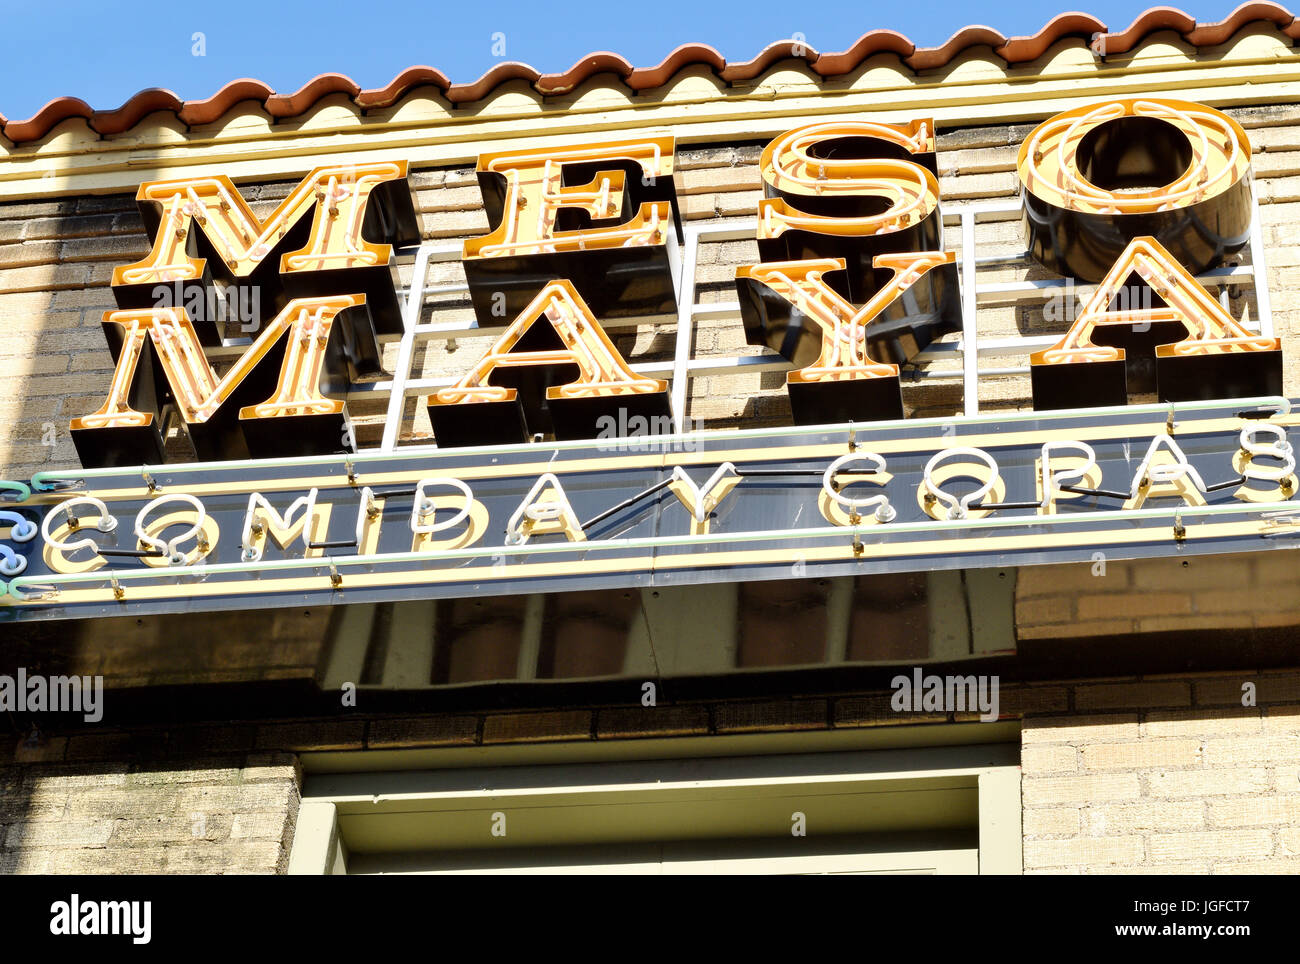 Meso Maya restaurant in Dallas, Texas Stock Photo